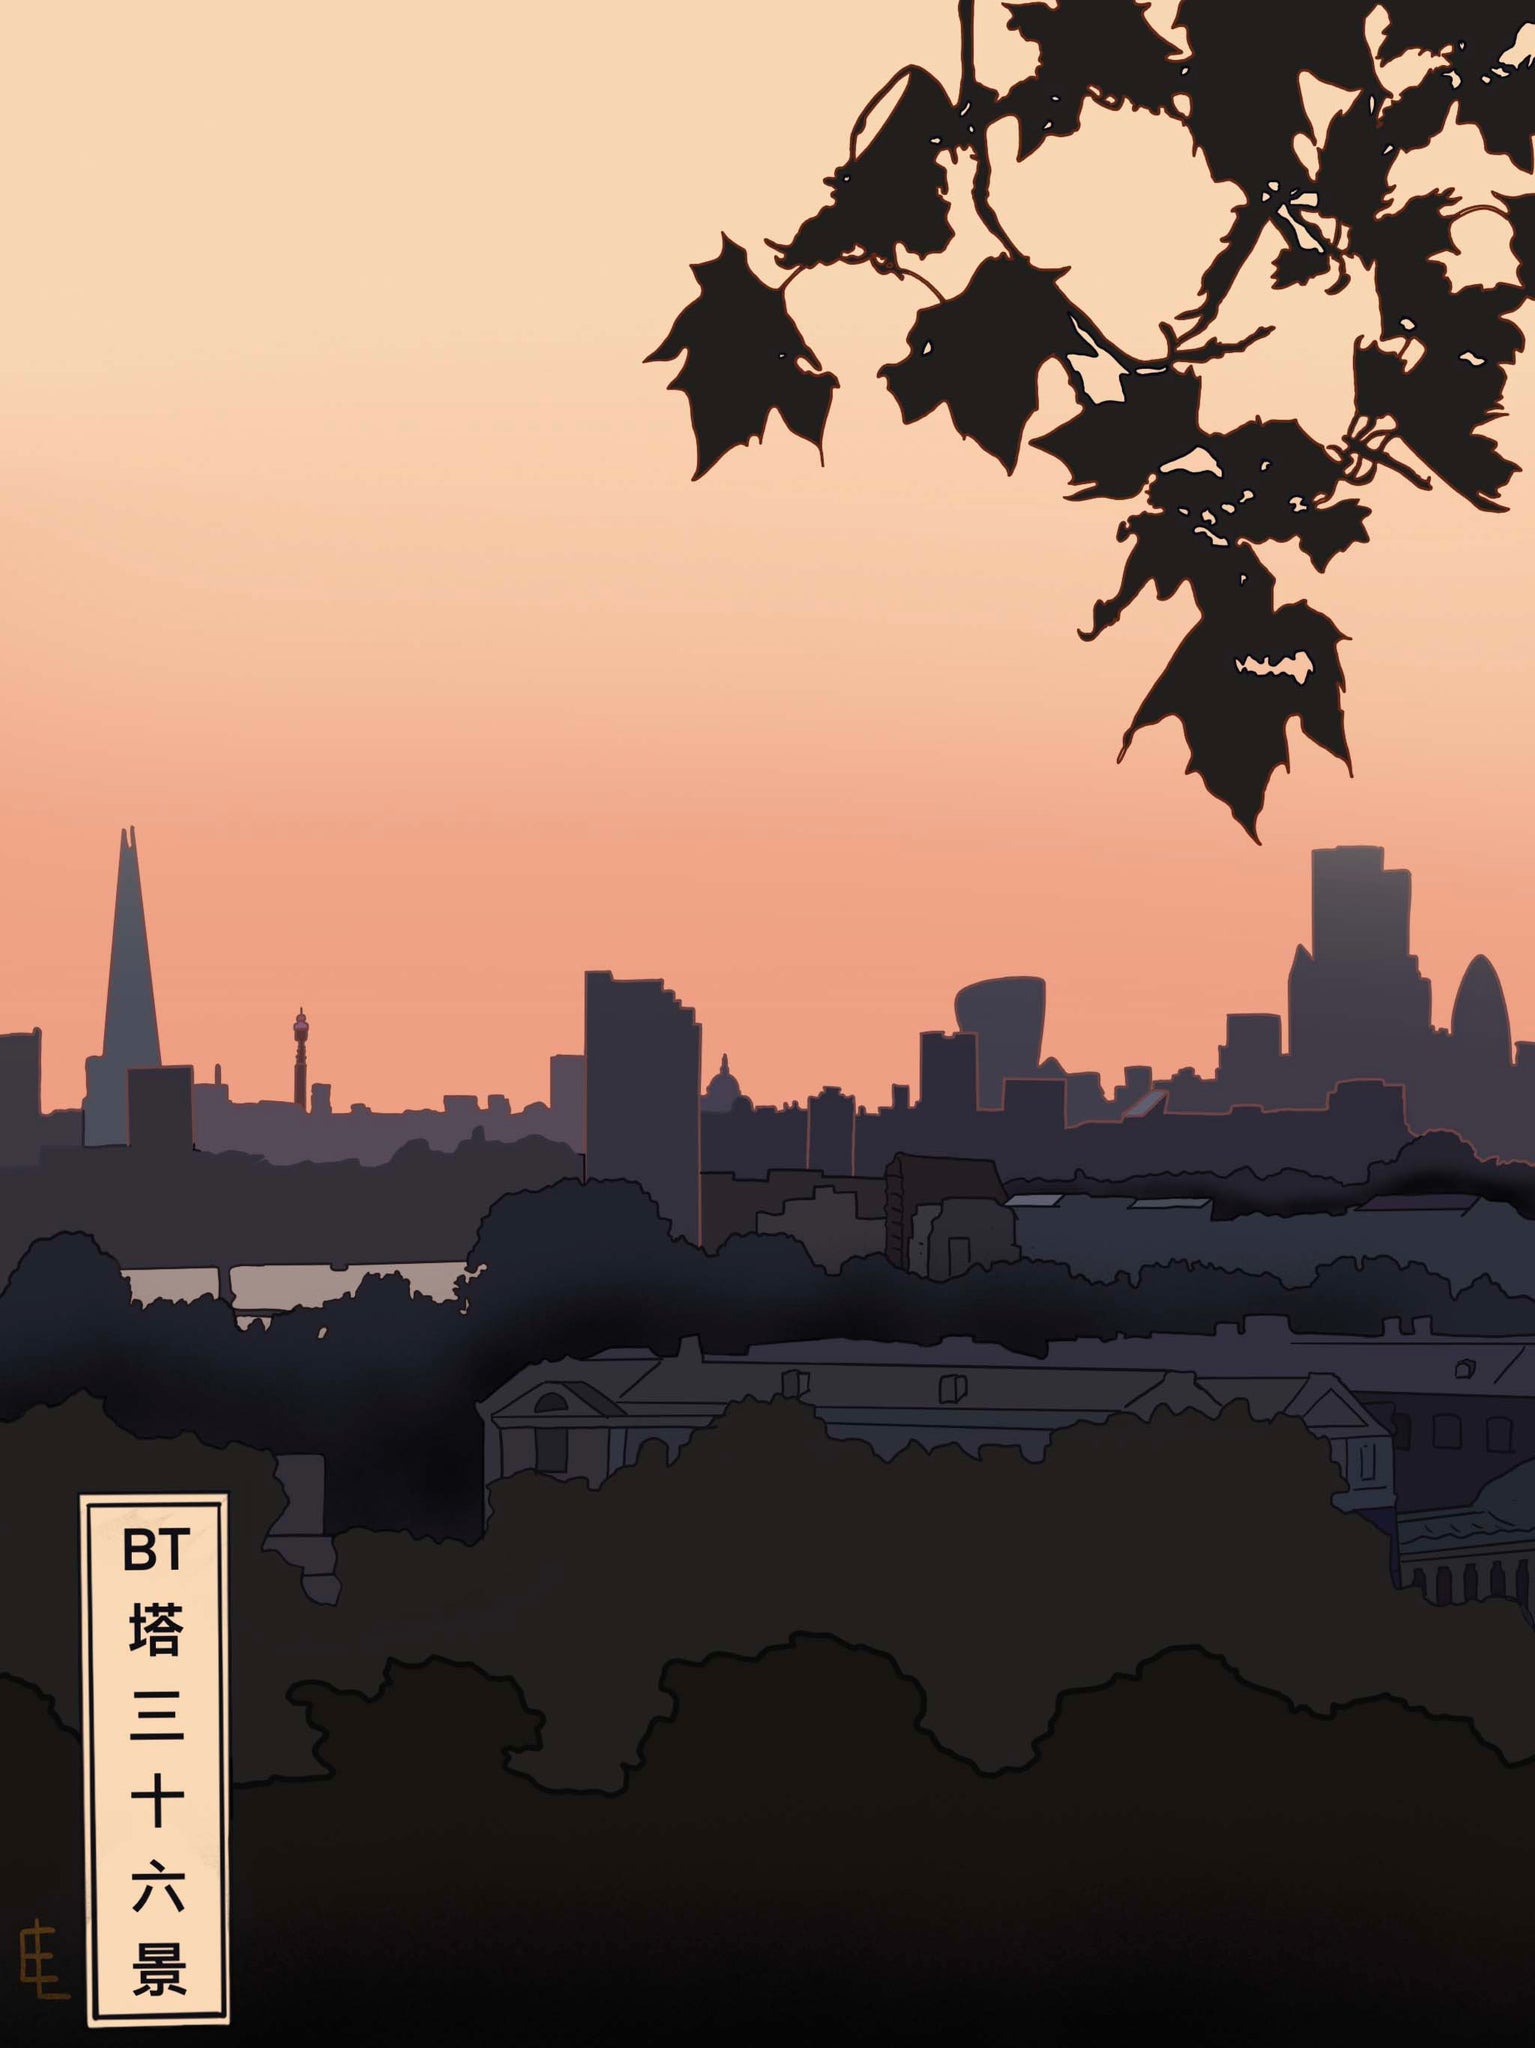 ‘Twilight’: BT Tower from Greenwich Park